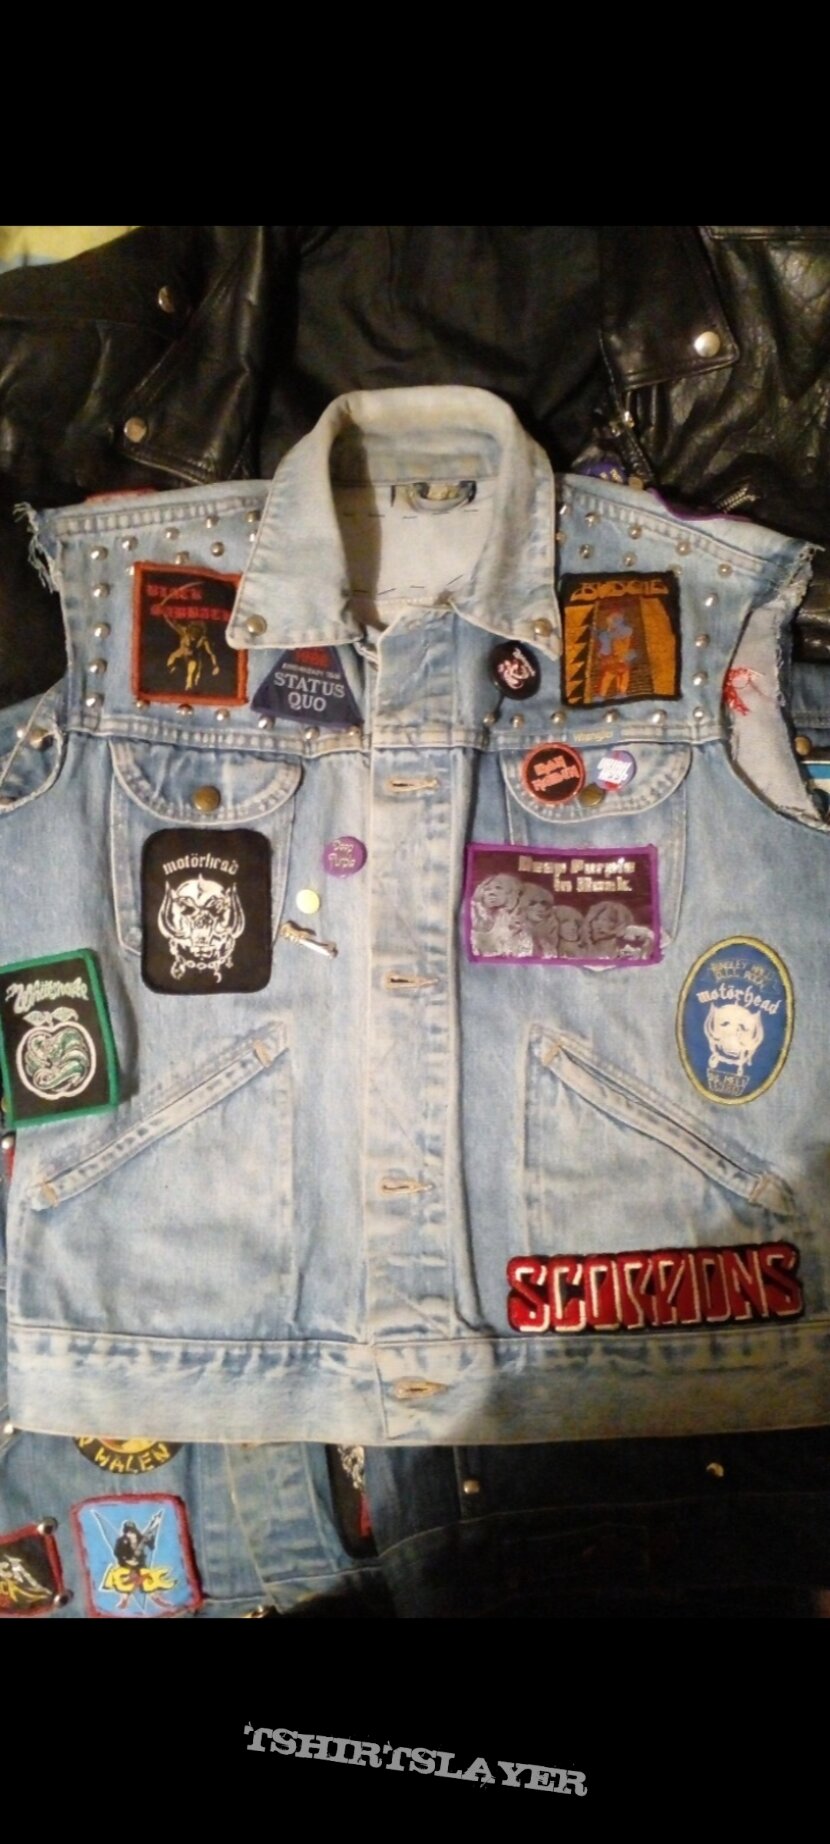 Deep Purple Wrangler oldschool jacket update